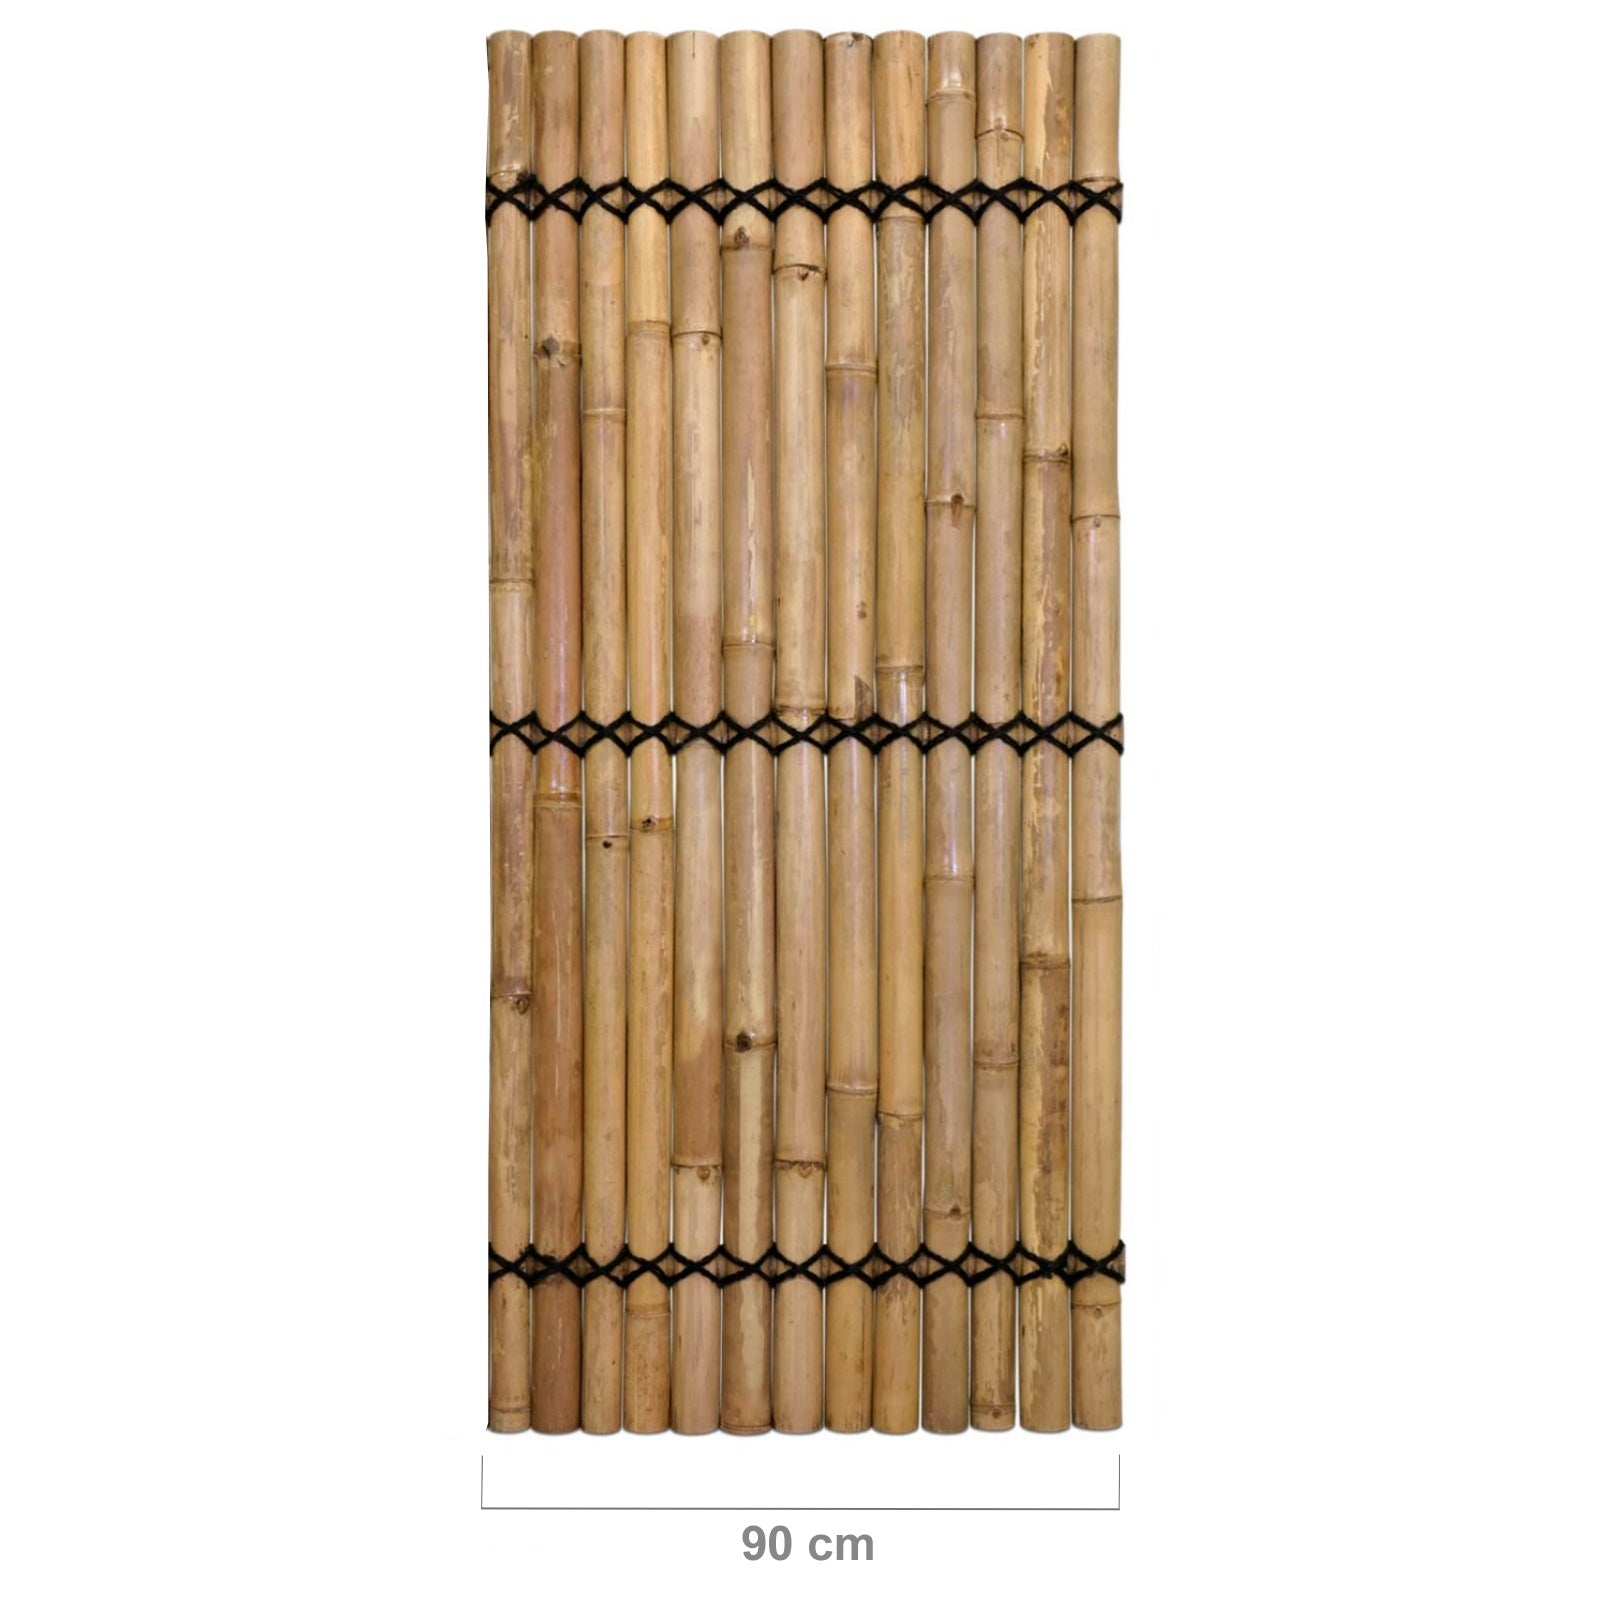 Bamboo Fence Half-round Nature